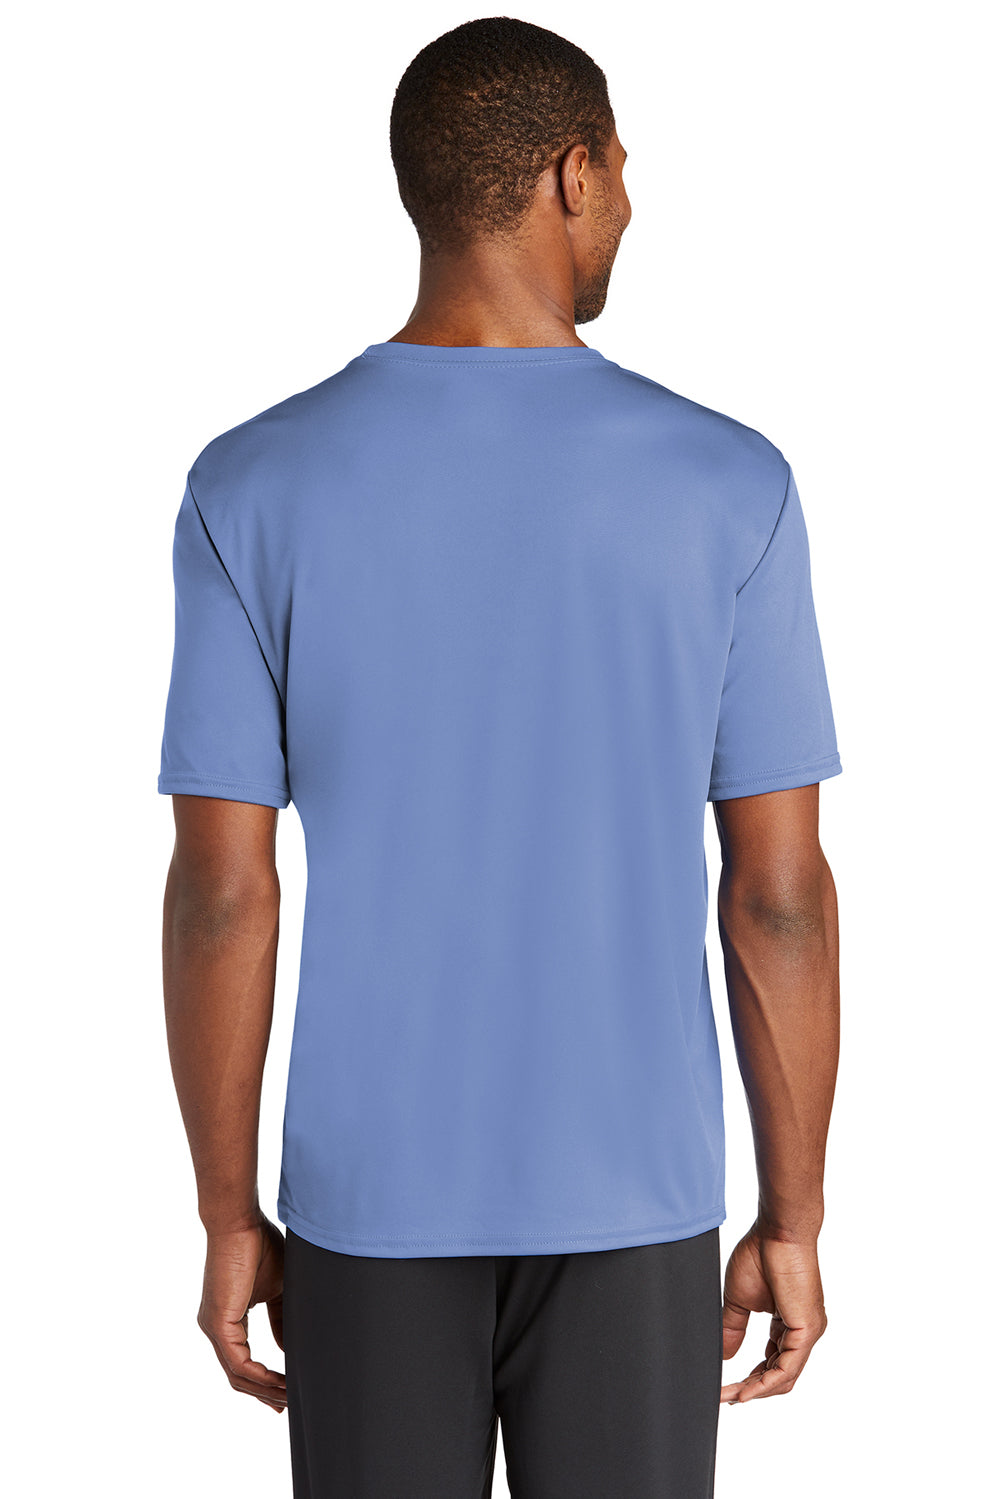 Port & Company PC380 Mens Dry Zone Performance Moisture Wicking Short Sleeve Crewneck T-Shirt Carolina Blue Back